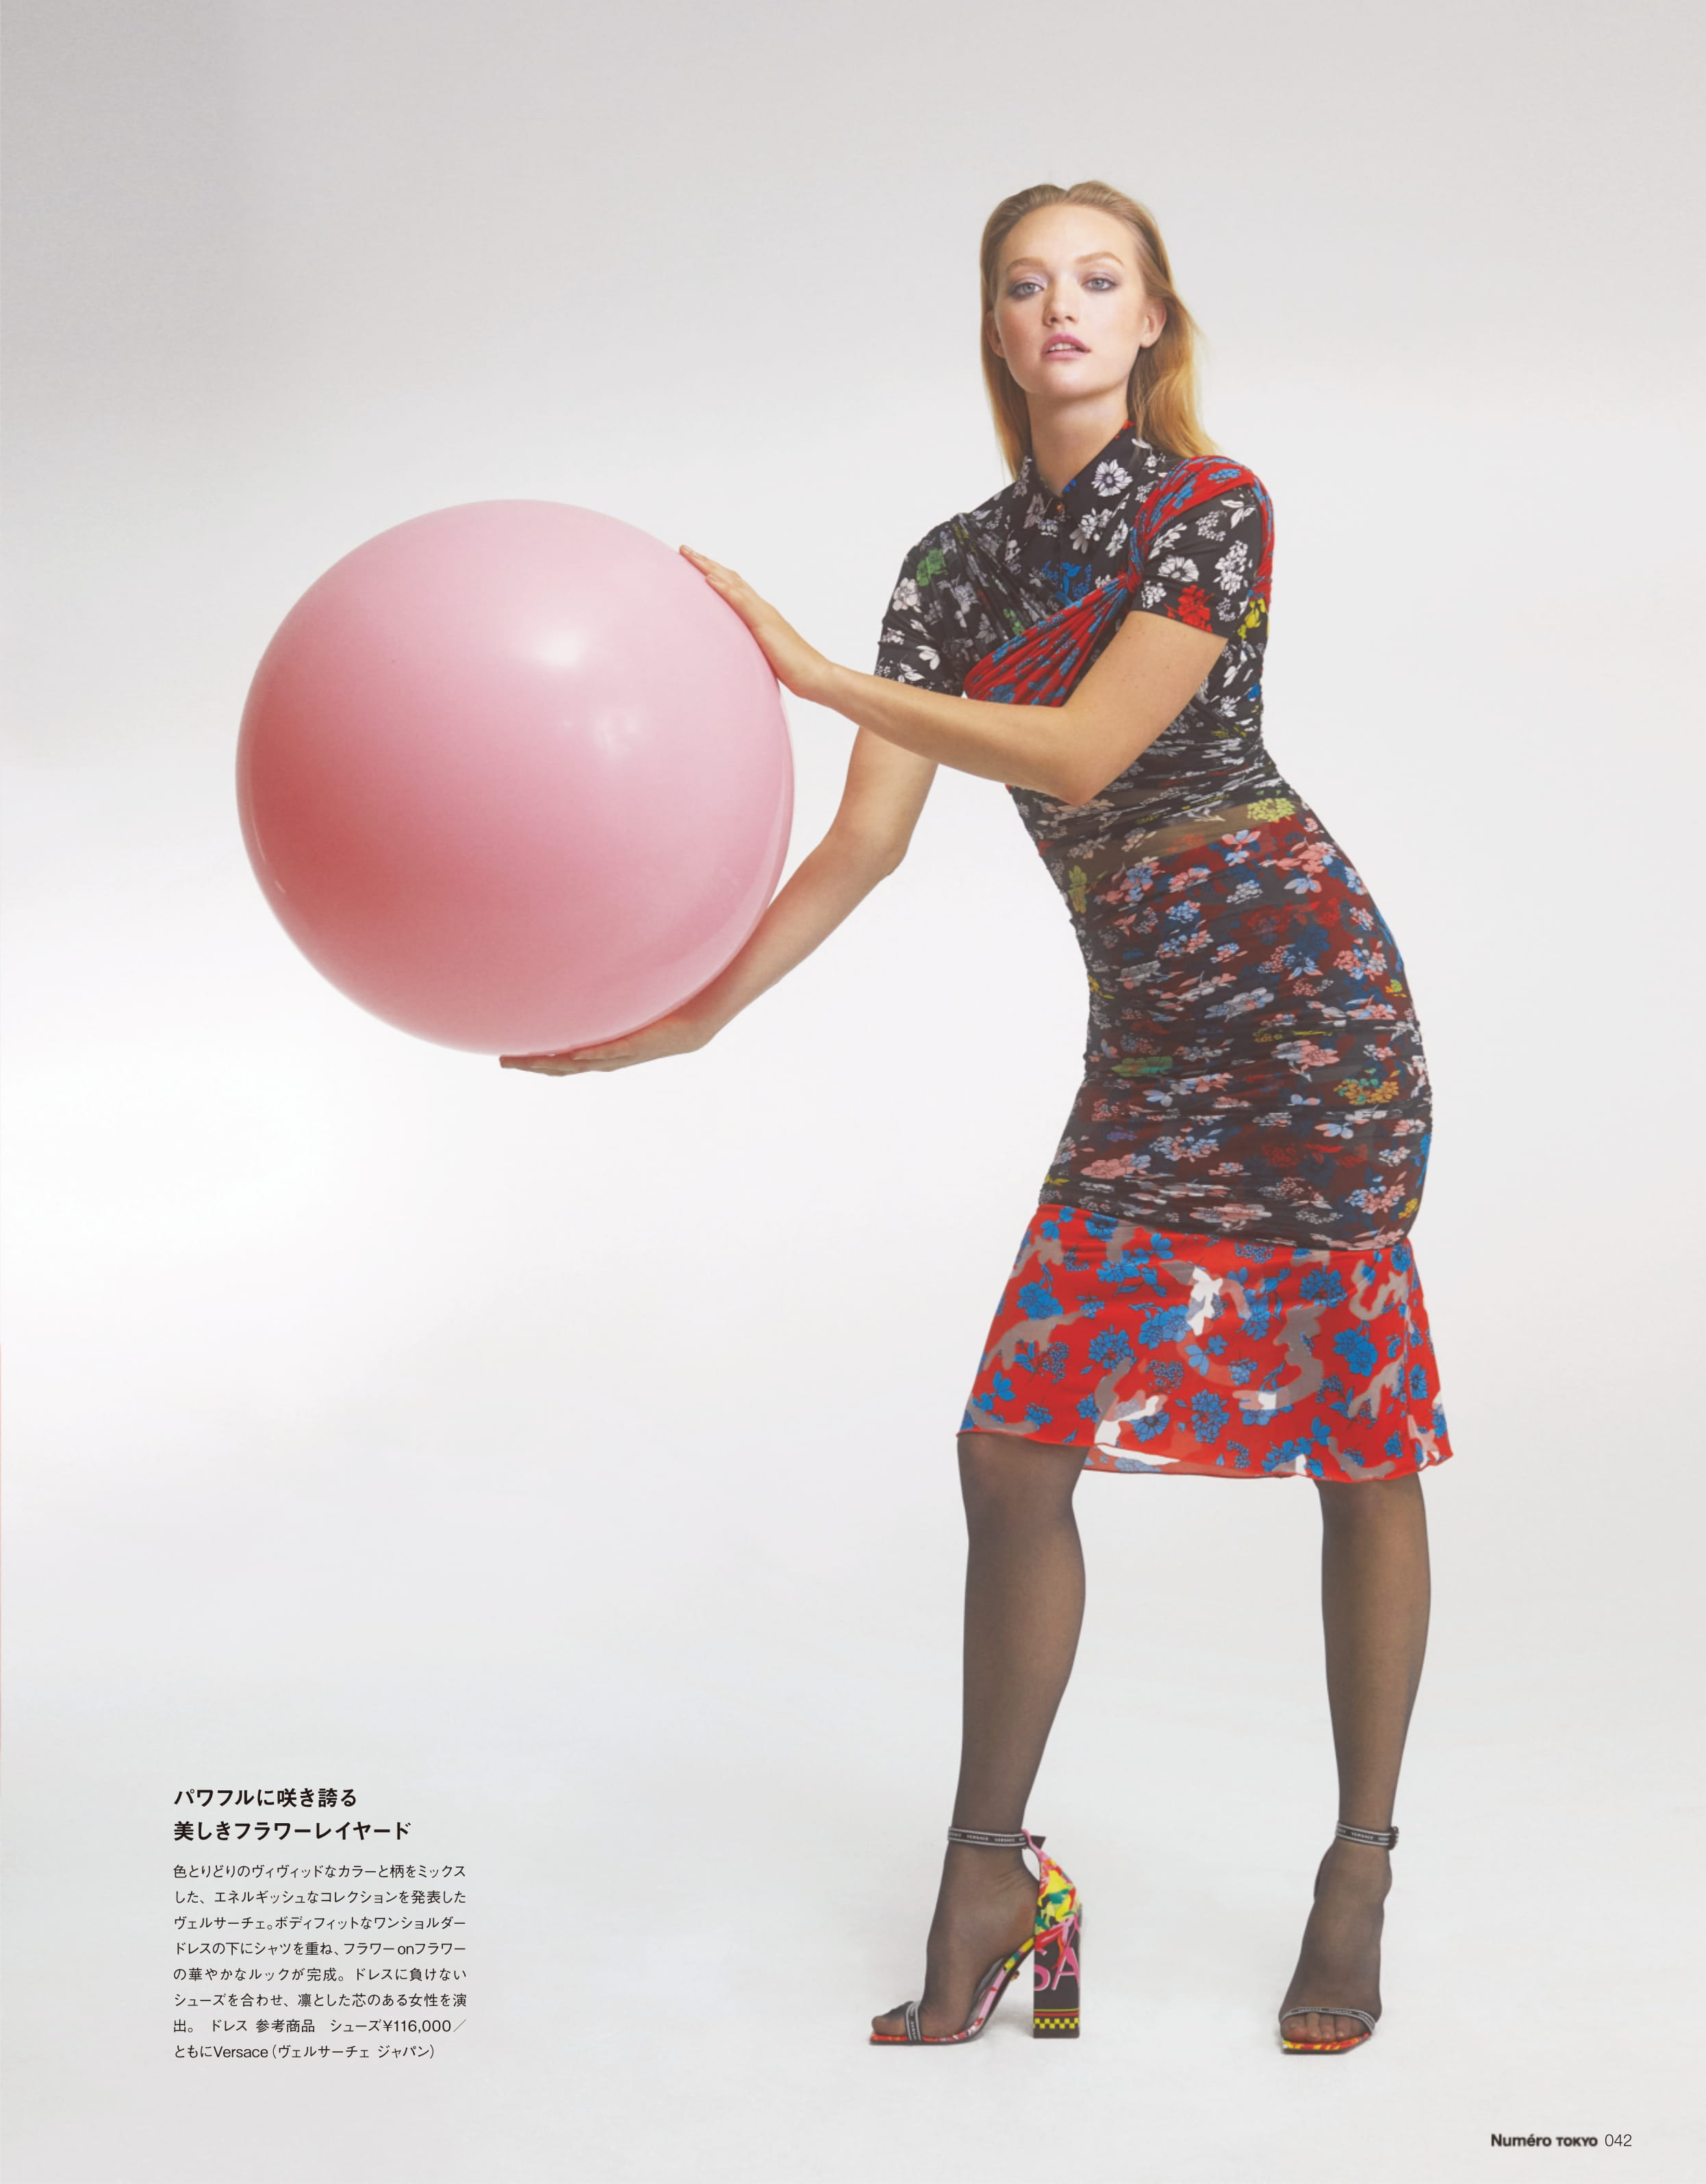 Gemma Ward by Zoey Grossman for Numero Tokyo (4).jpg